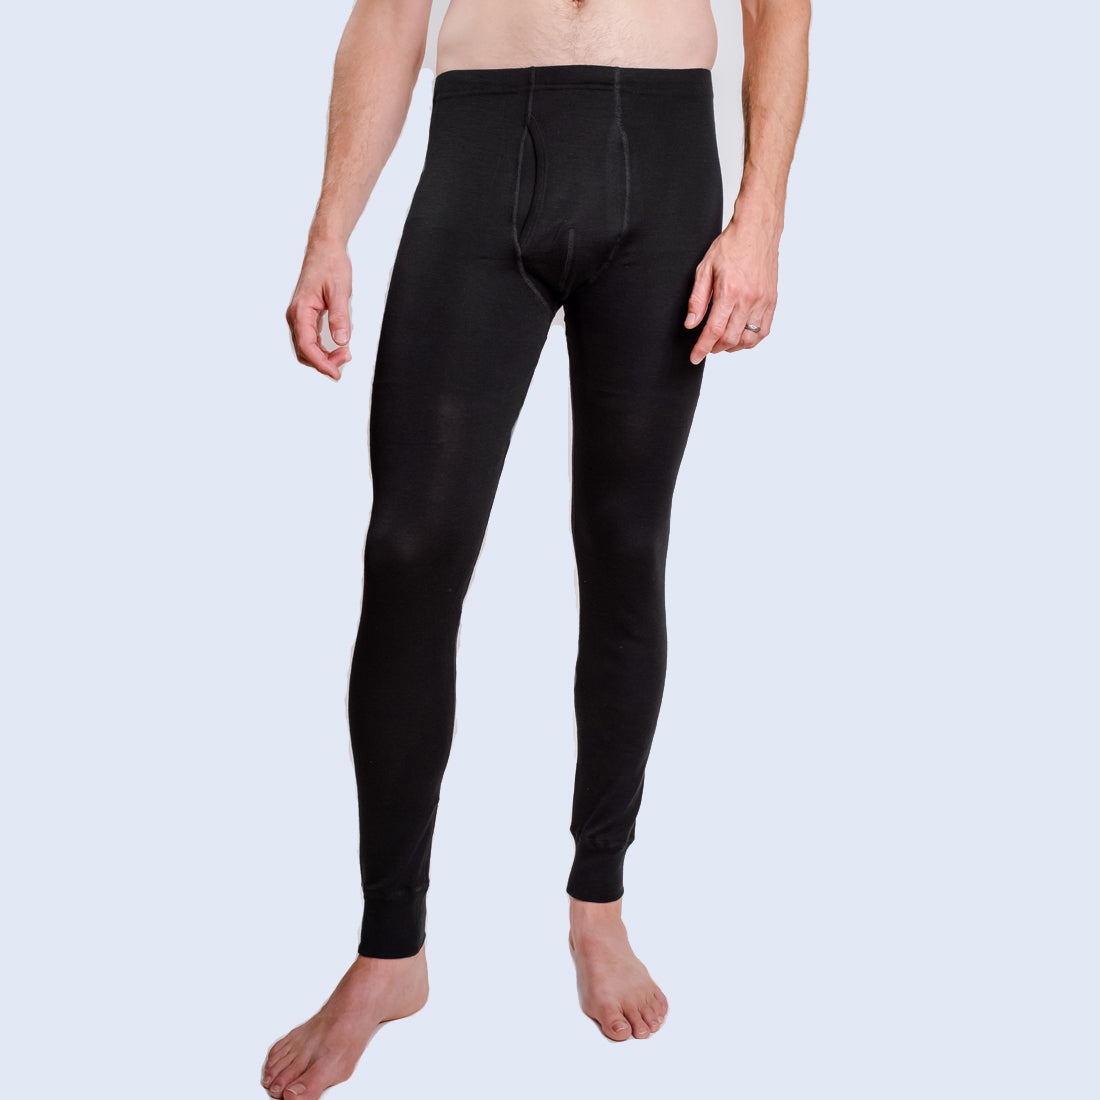 Hocosa Men's Long Underwear Pants in Organic